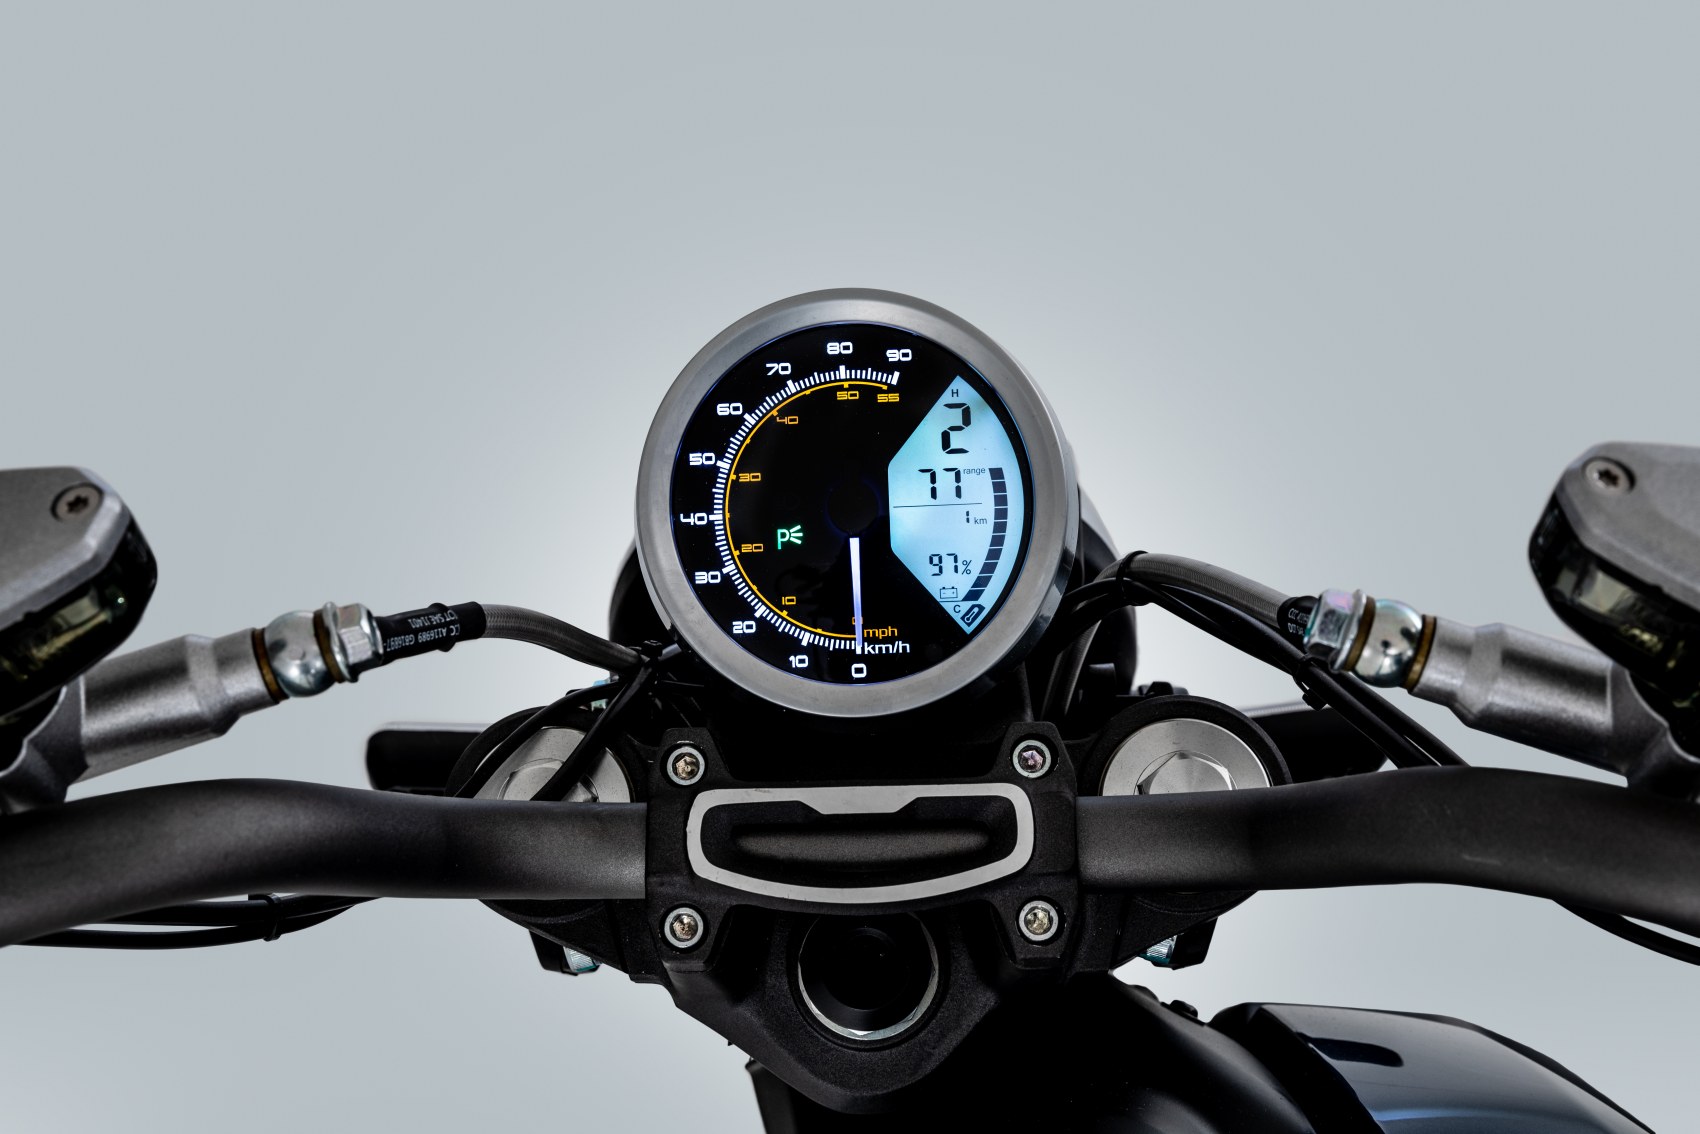 Super Soco TC electric motorcycle digital dash display unit